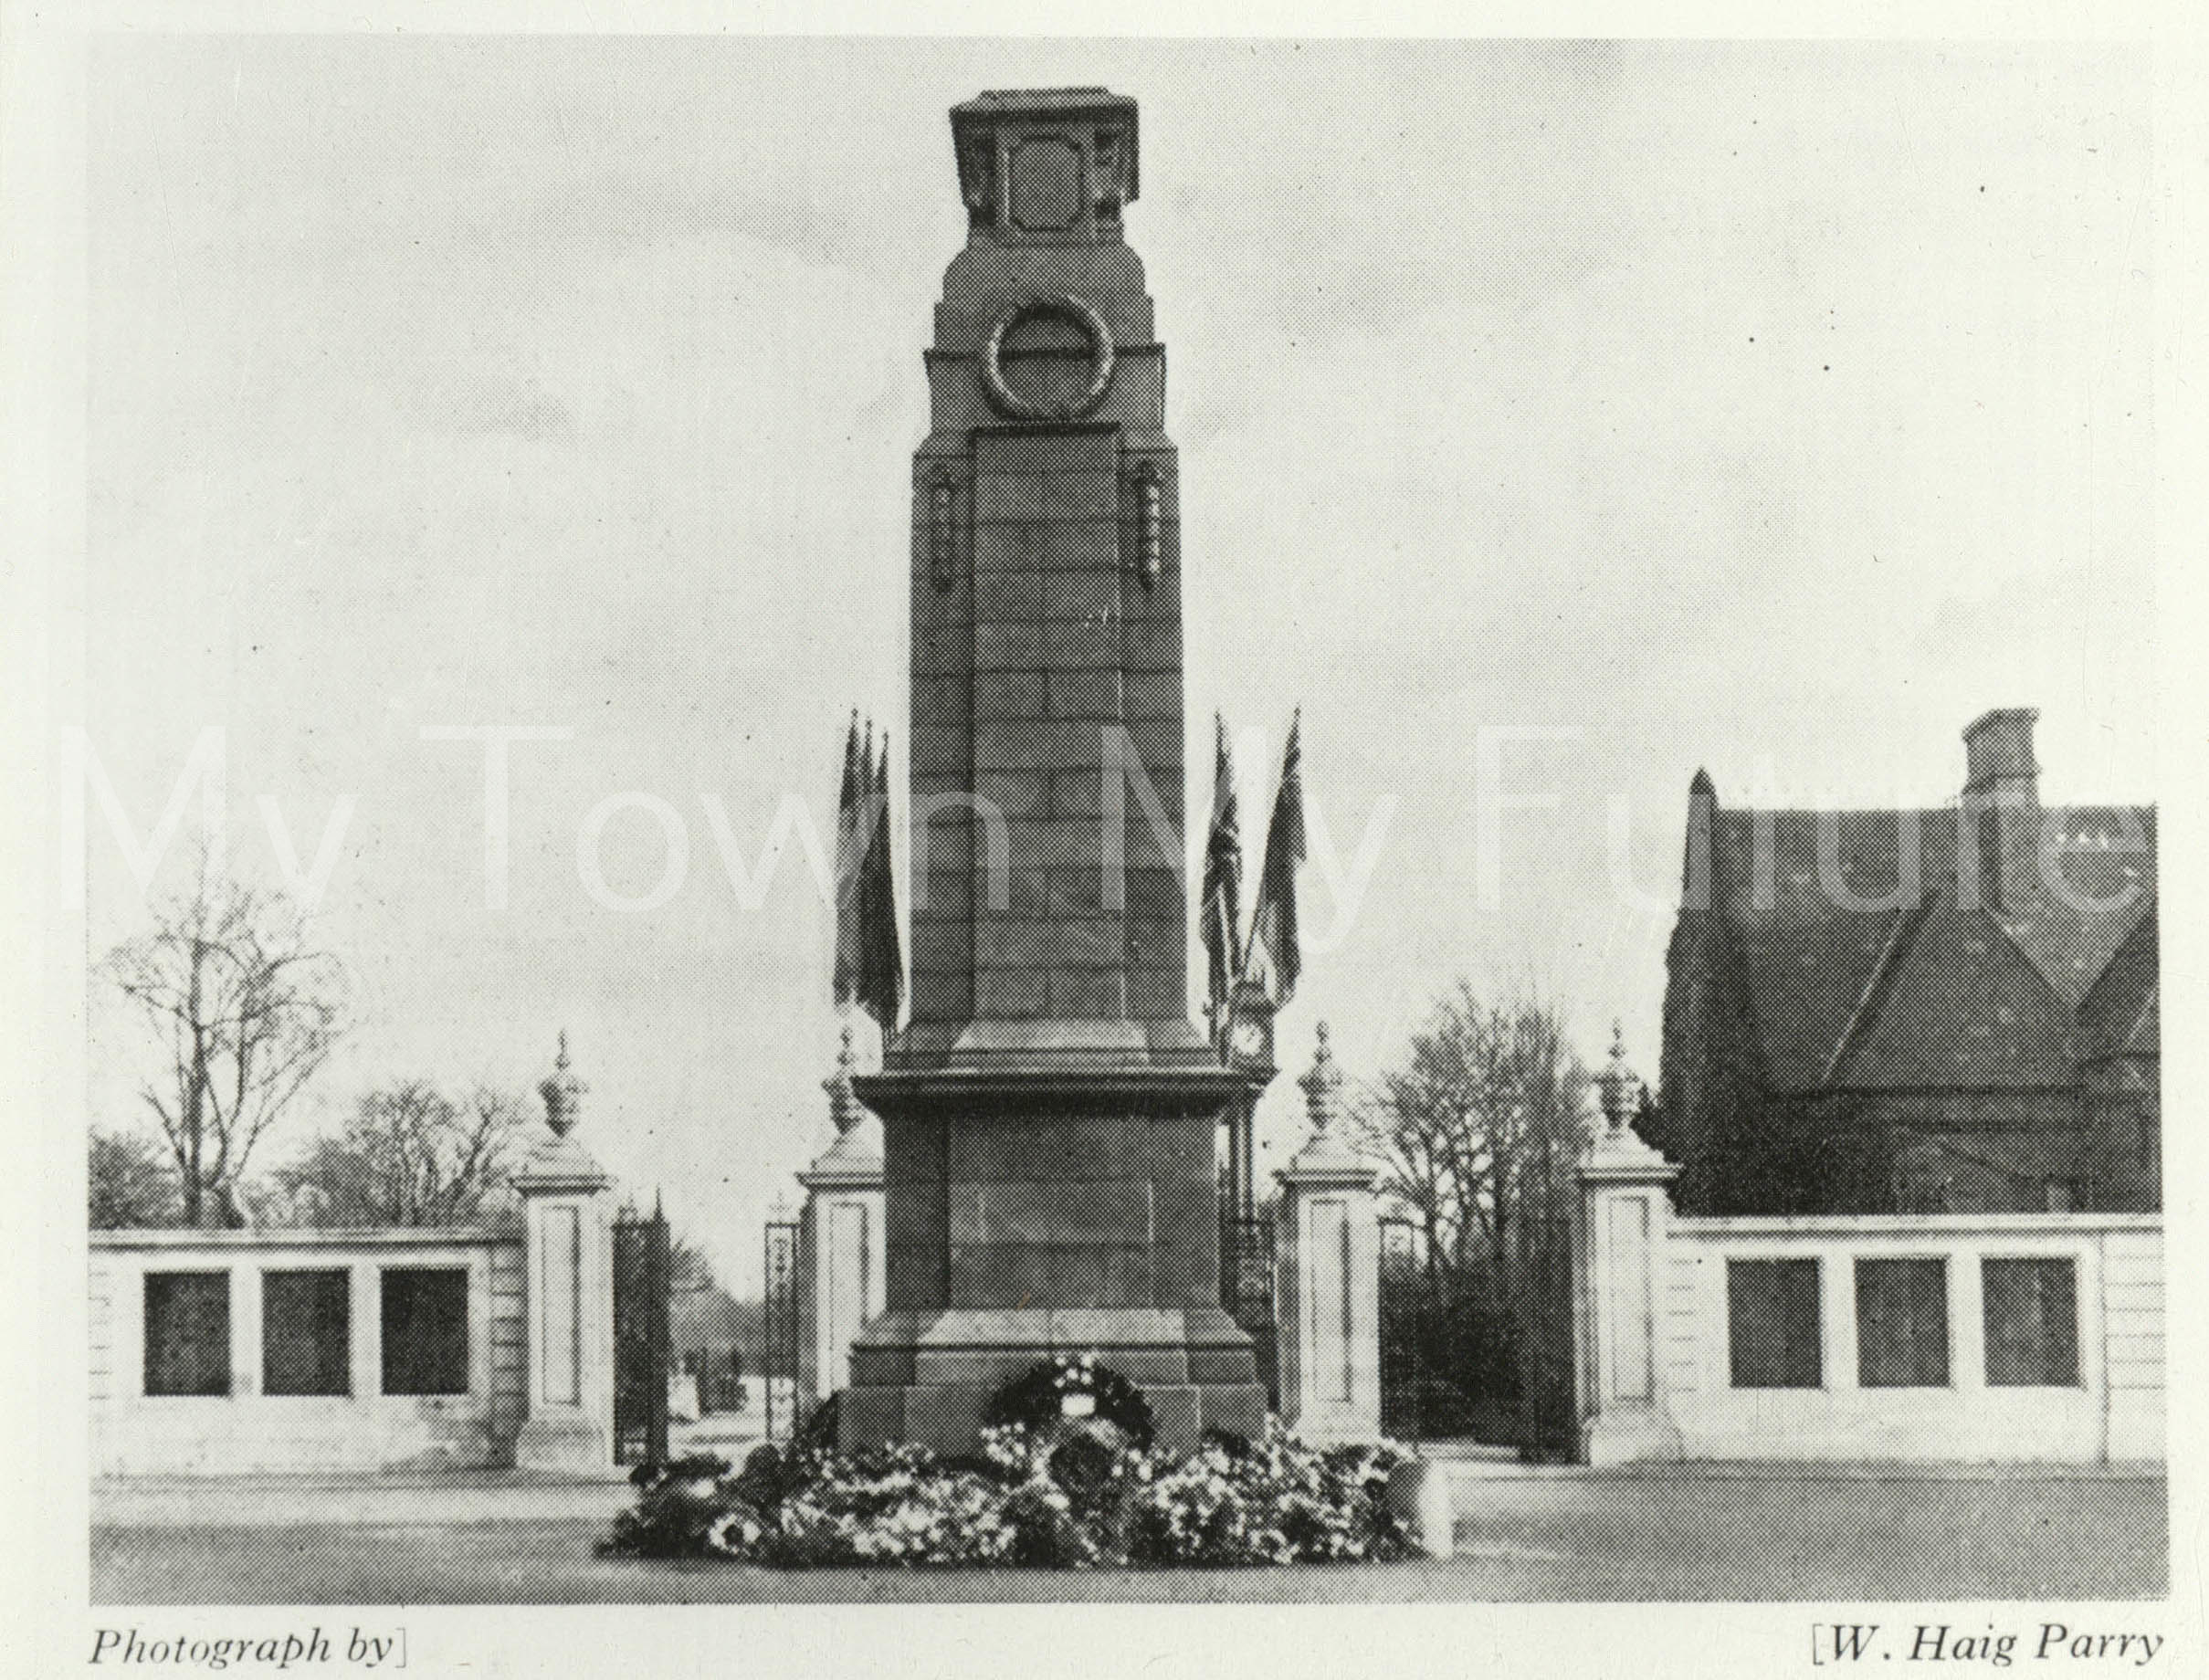 Middlesbrough Cenotaph